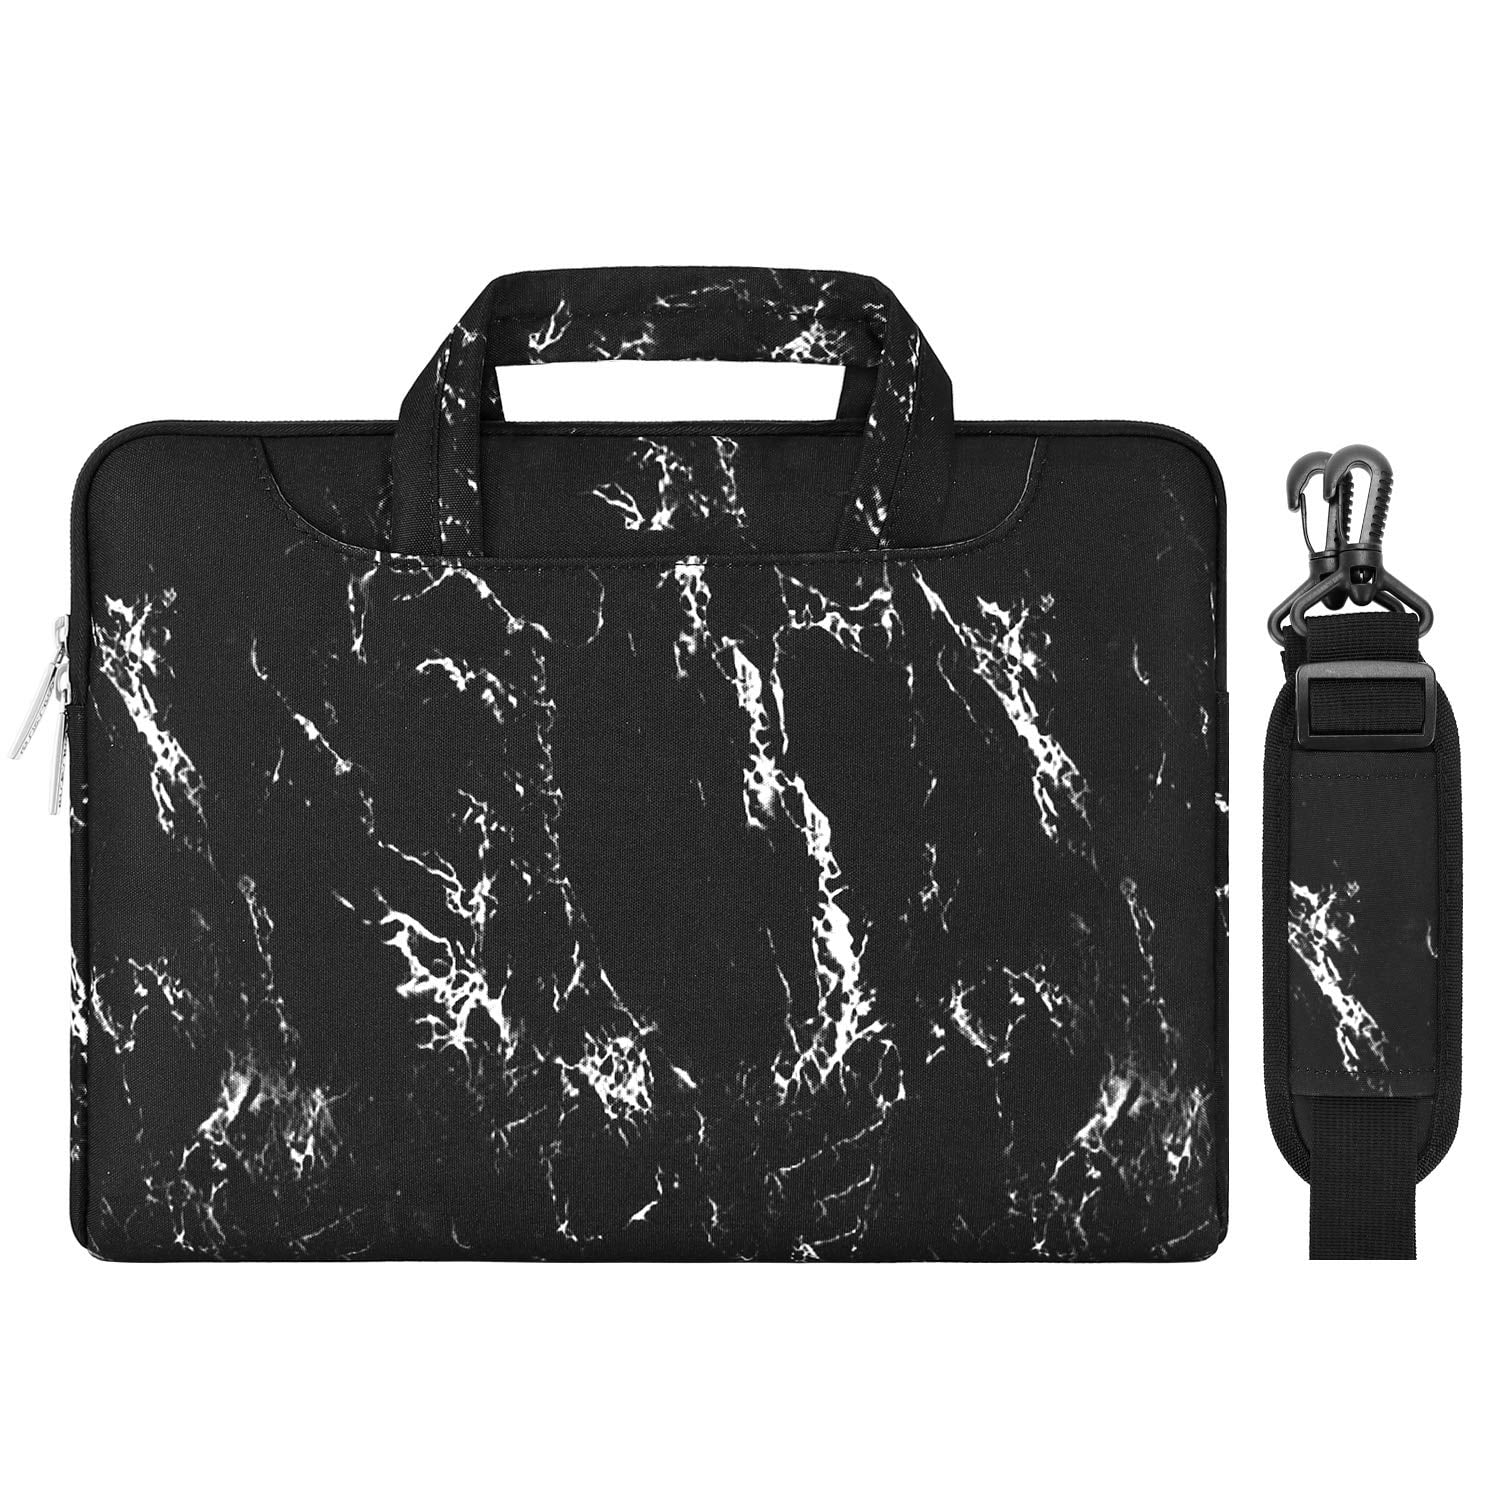 Grunge American Football Business Handbag Computer Shoulder Bags Fits 15.6 Inch Notebook Laptop Tote Work Bag Women